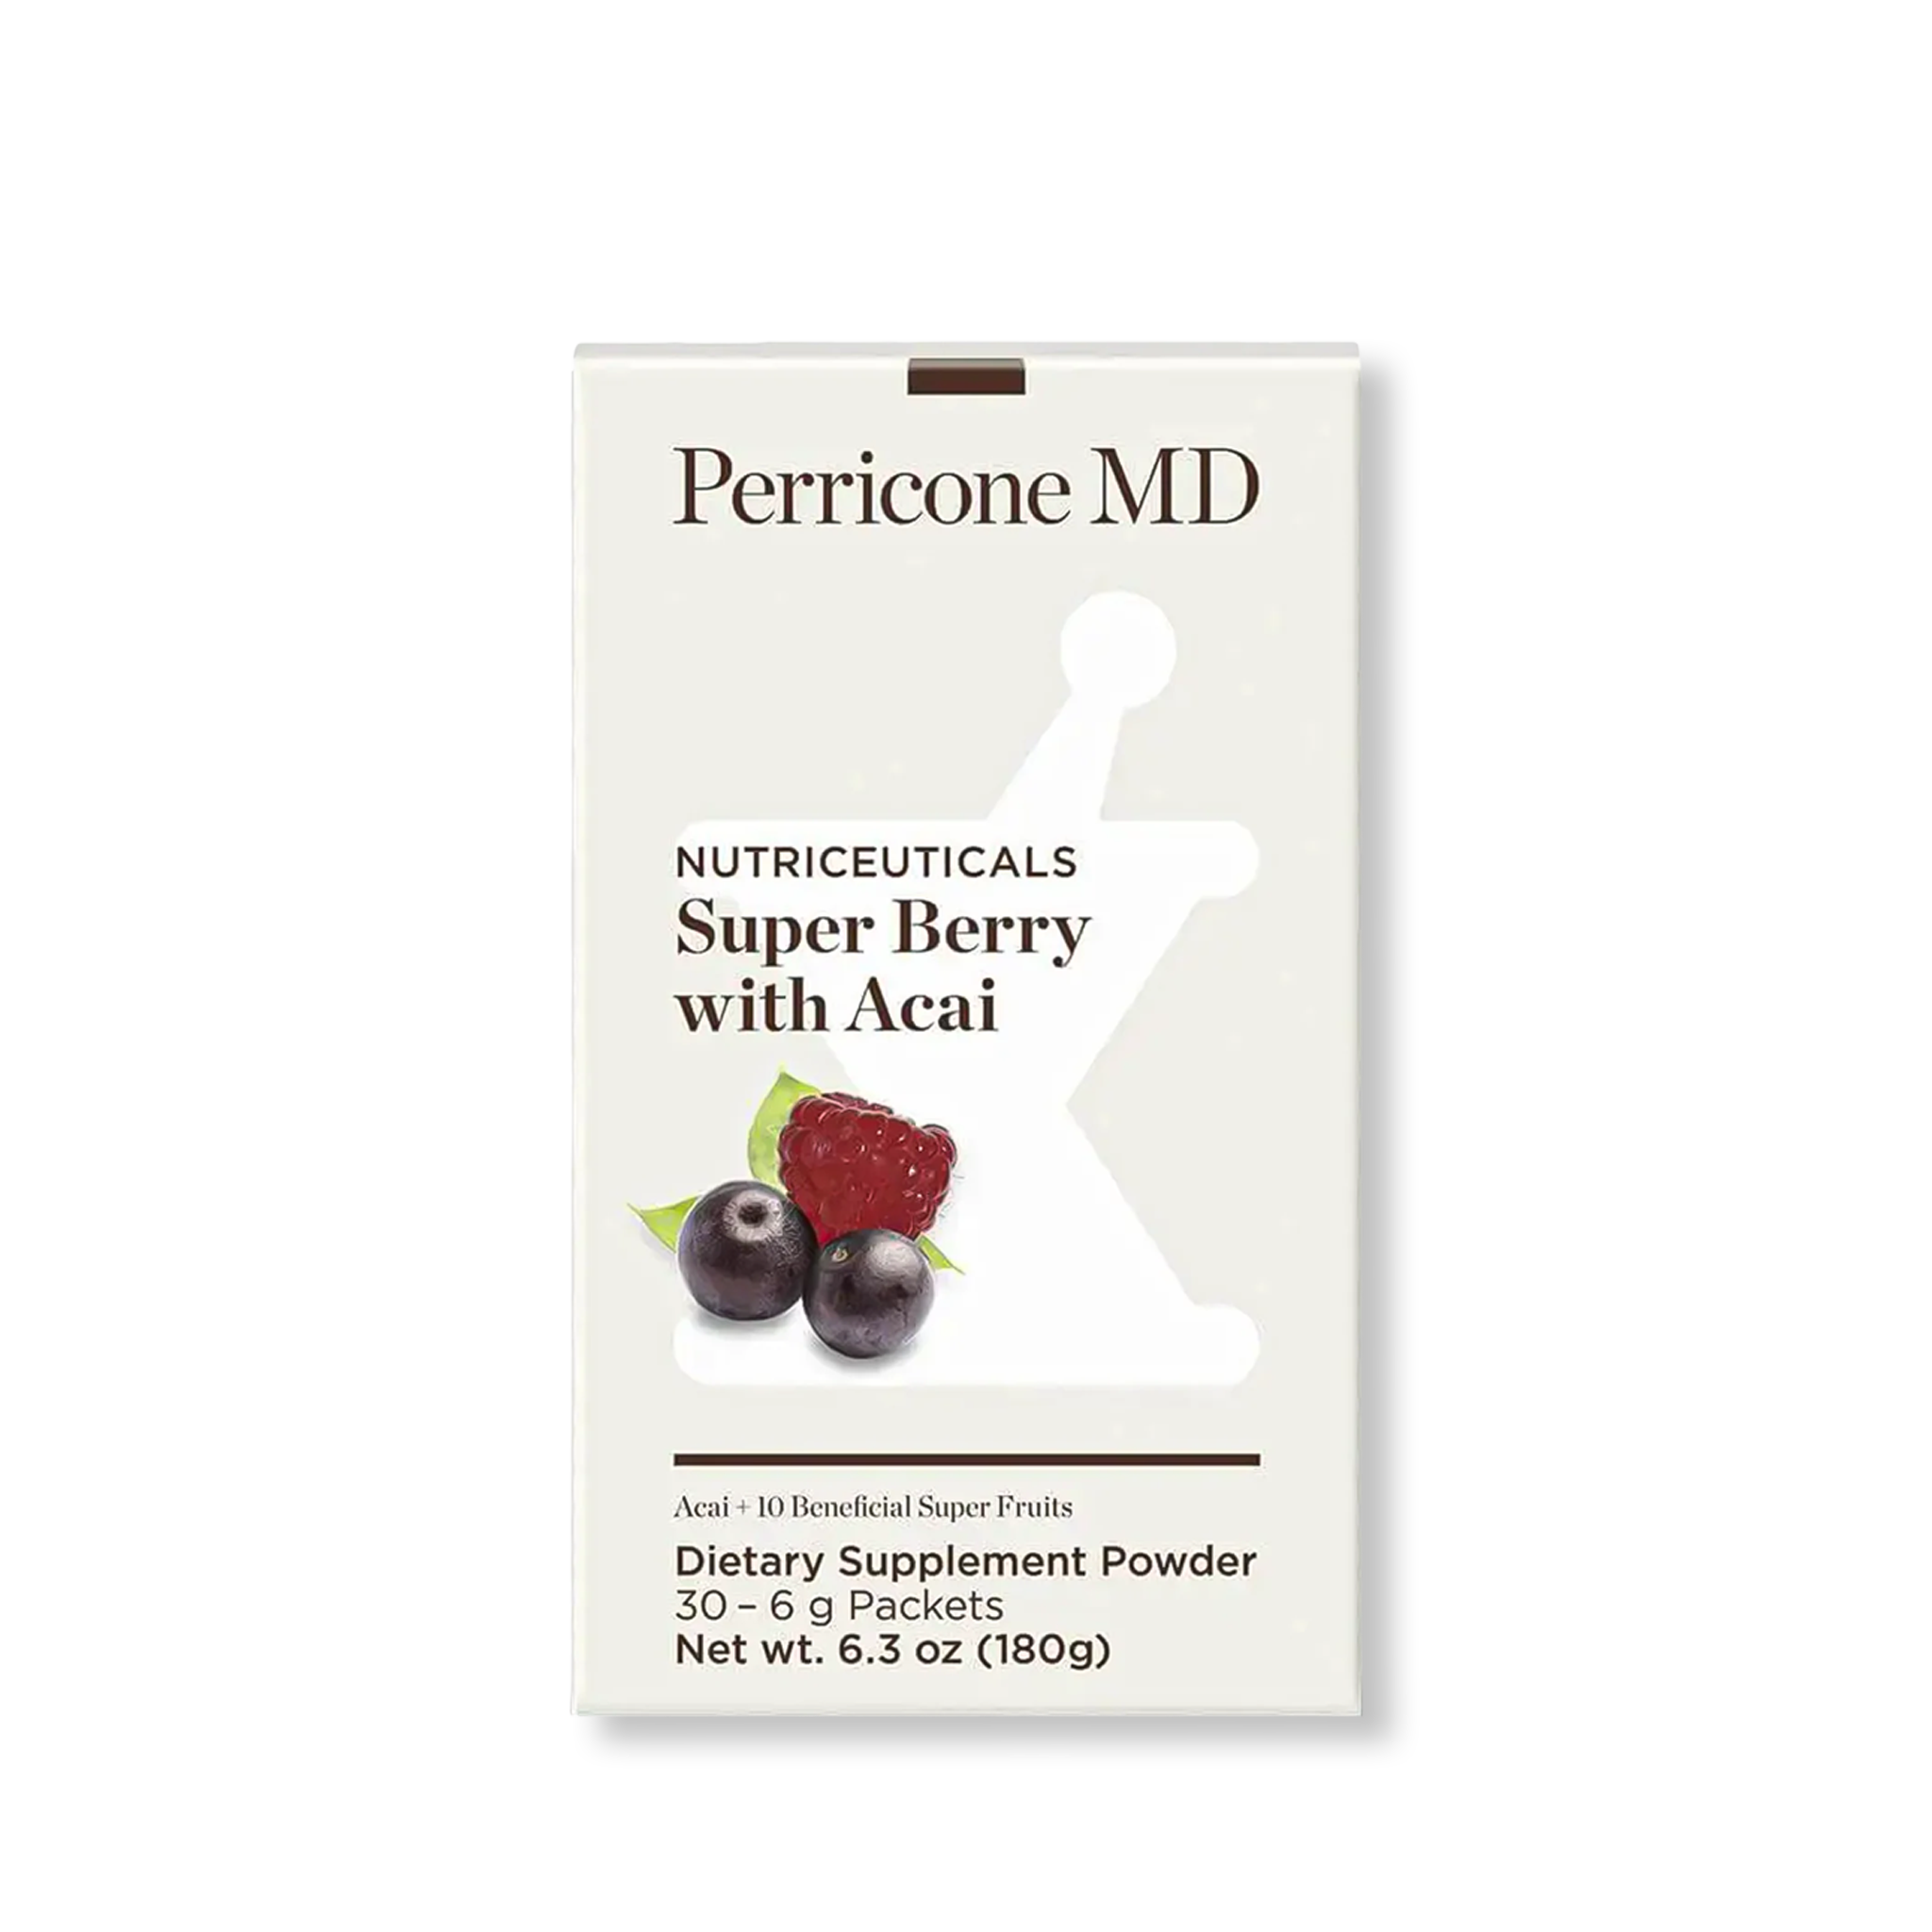 Perricone MD Super Berry Acai Supplement Powder